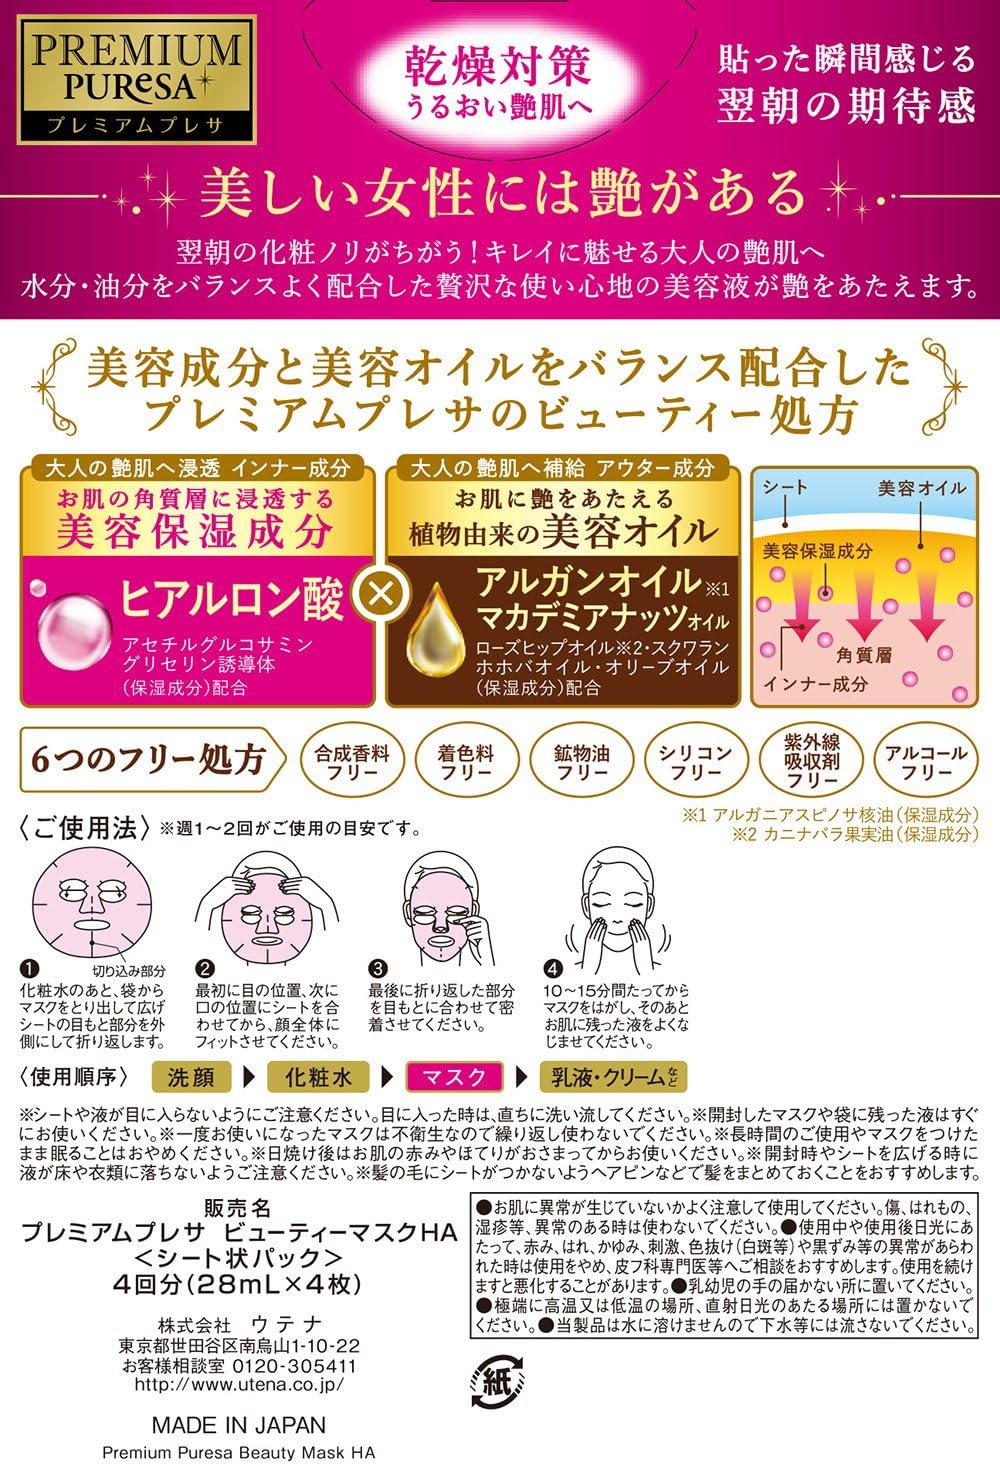 Utena Premium Puresa Beauty Face Mask 4pcs - Hyaluronic Acid - NihonMura